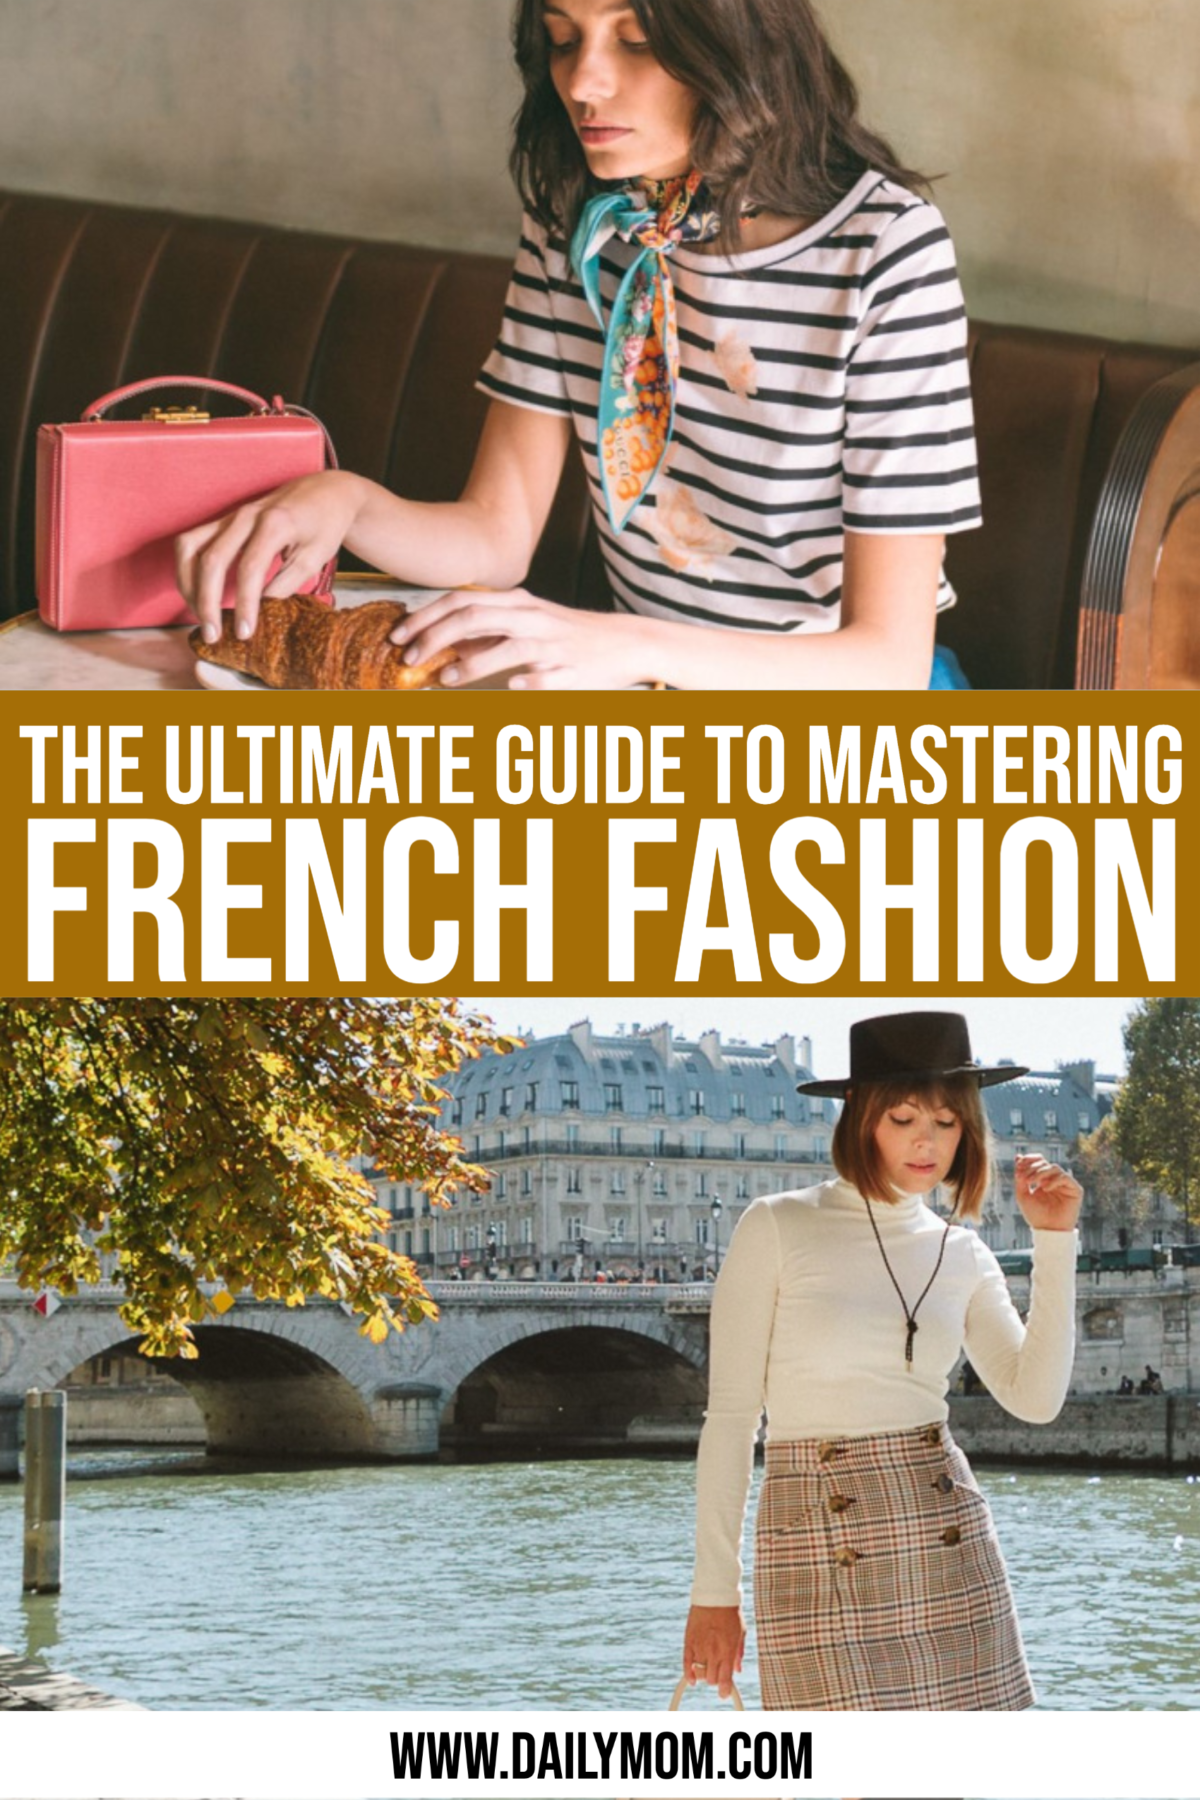 3 Easy Ways To Master French Fashion